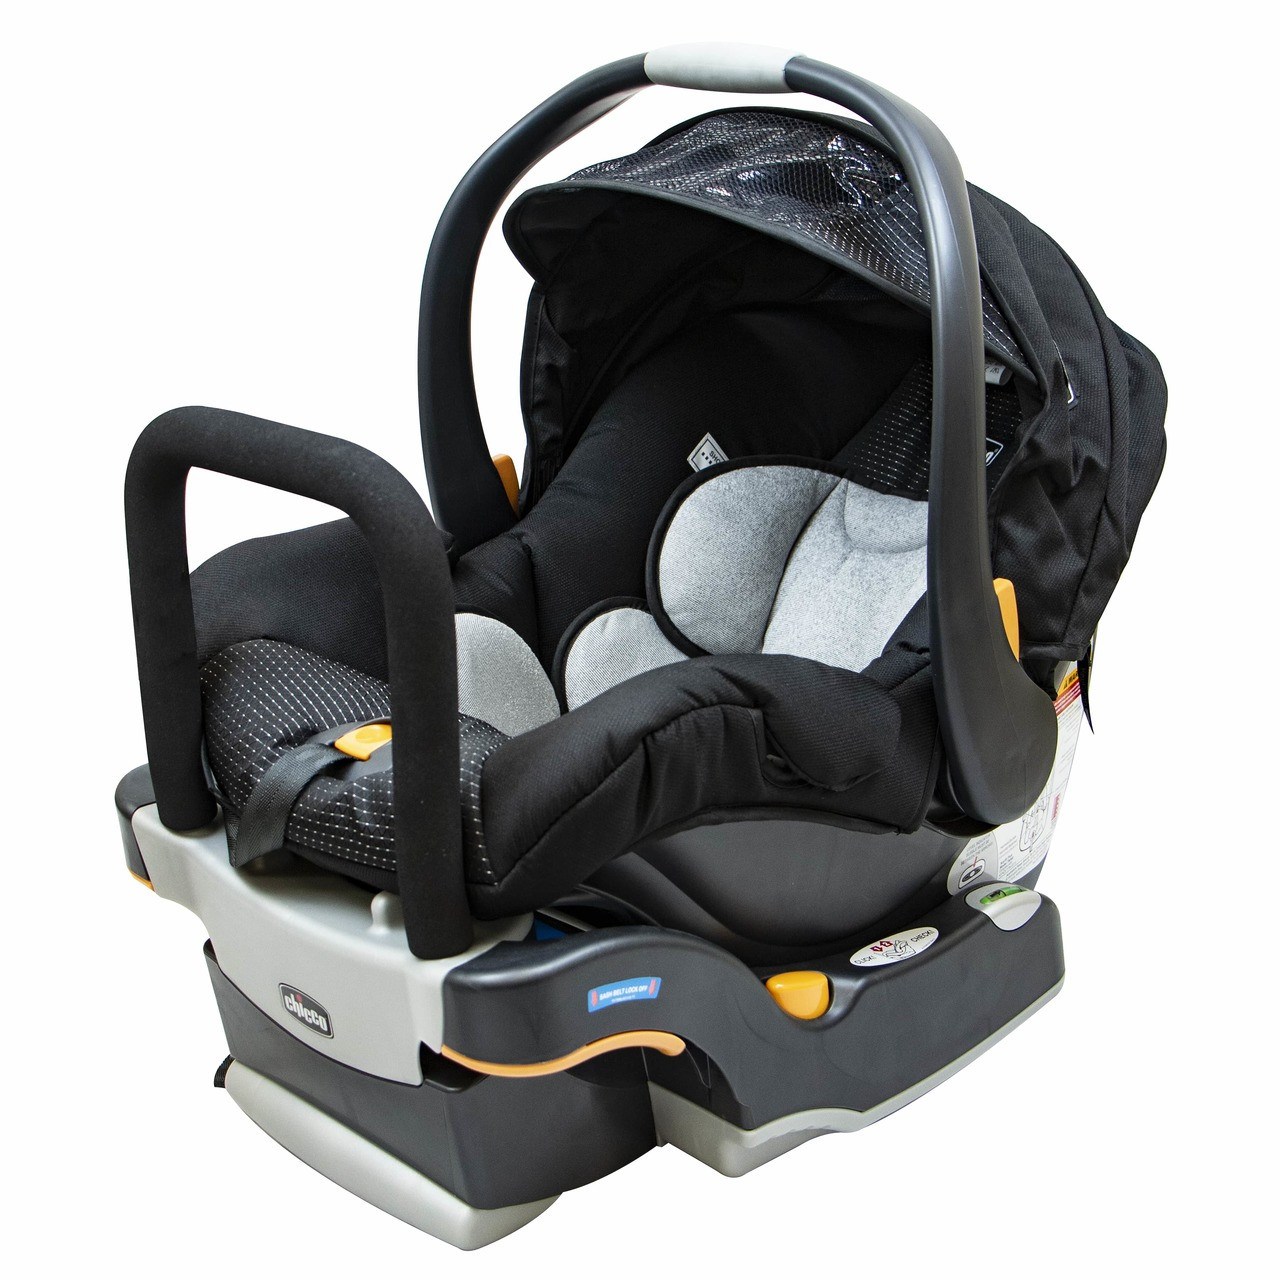 bravo infant car seat